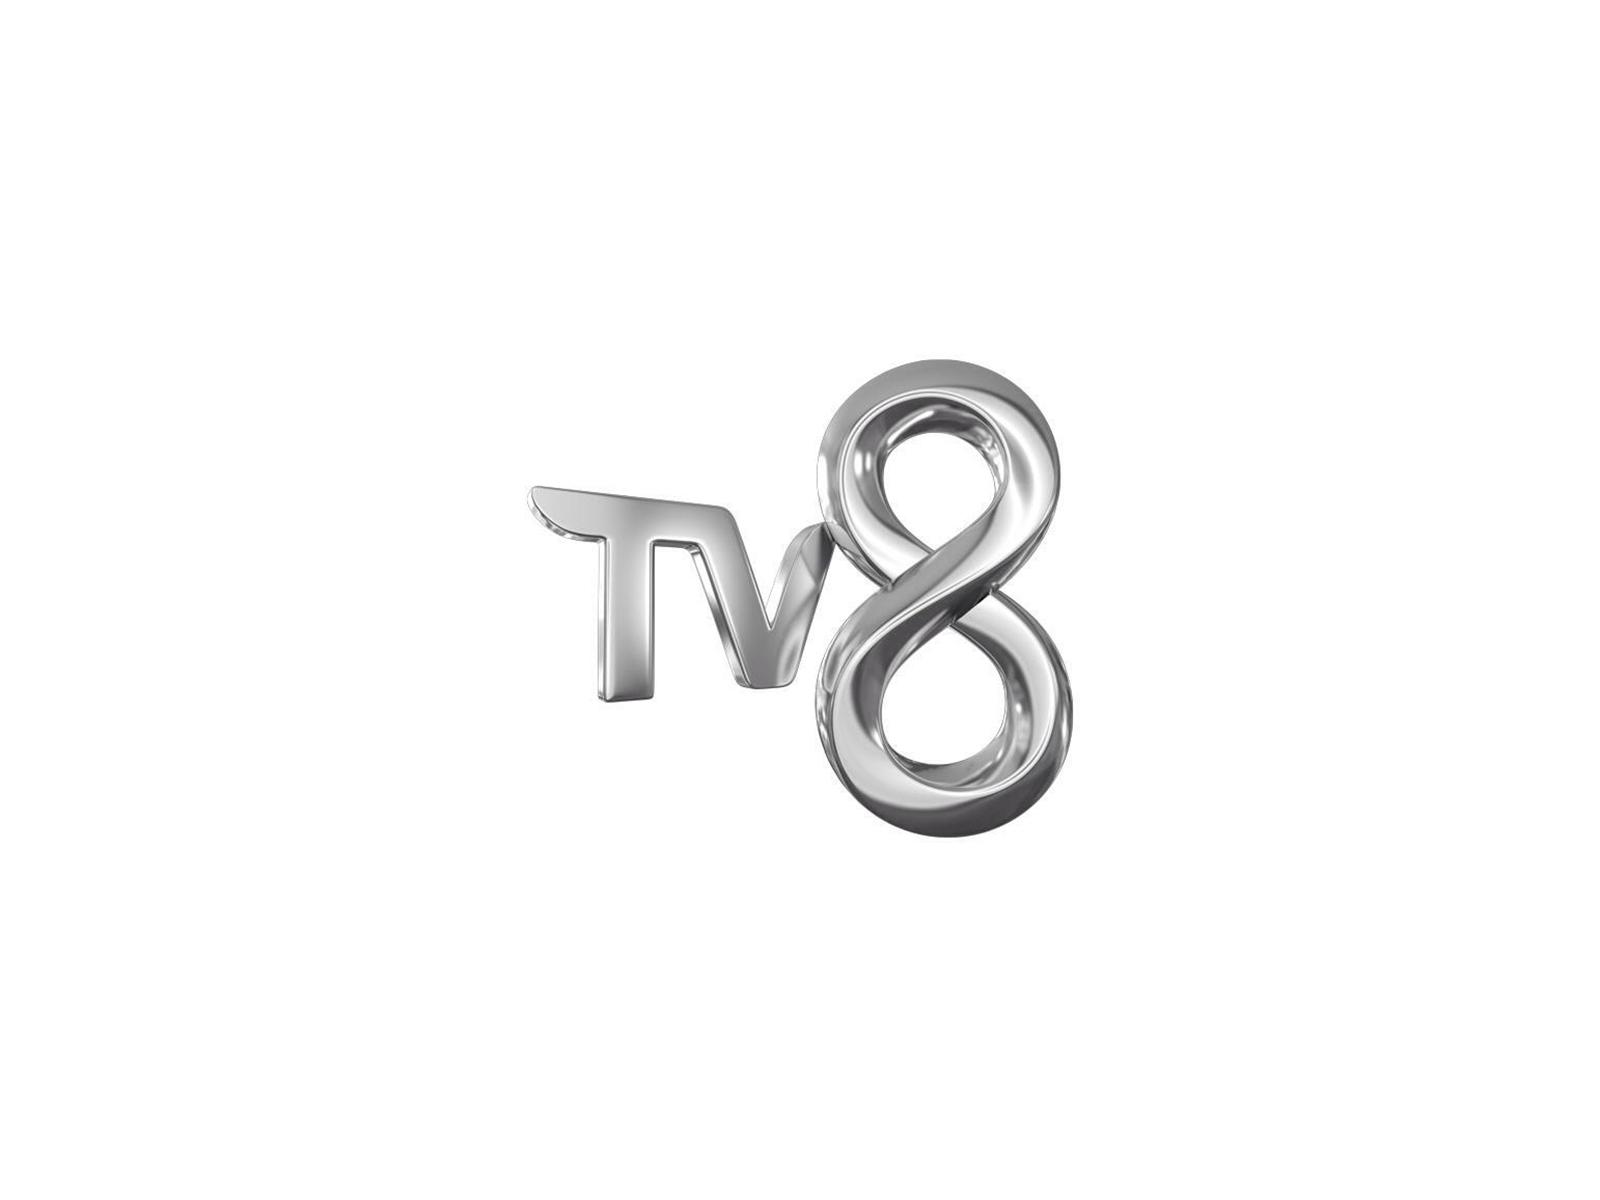 Tv8 canli yayin kesintisiz izle. Tv8 Телеканал. Tv8 Canli. Tv8 Lithuania. Tv8 (Молдавия).